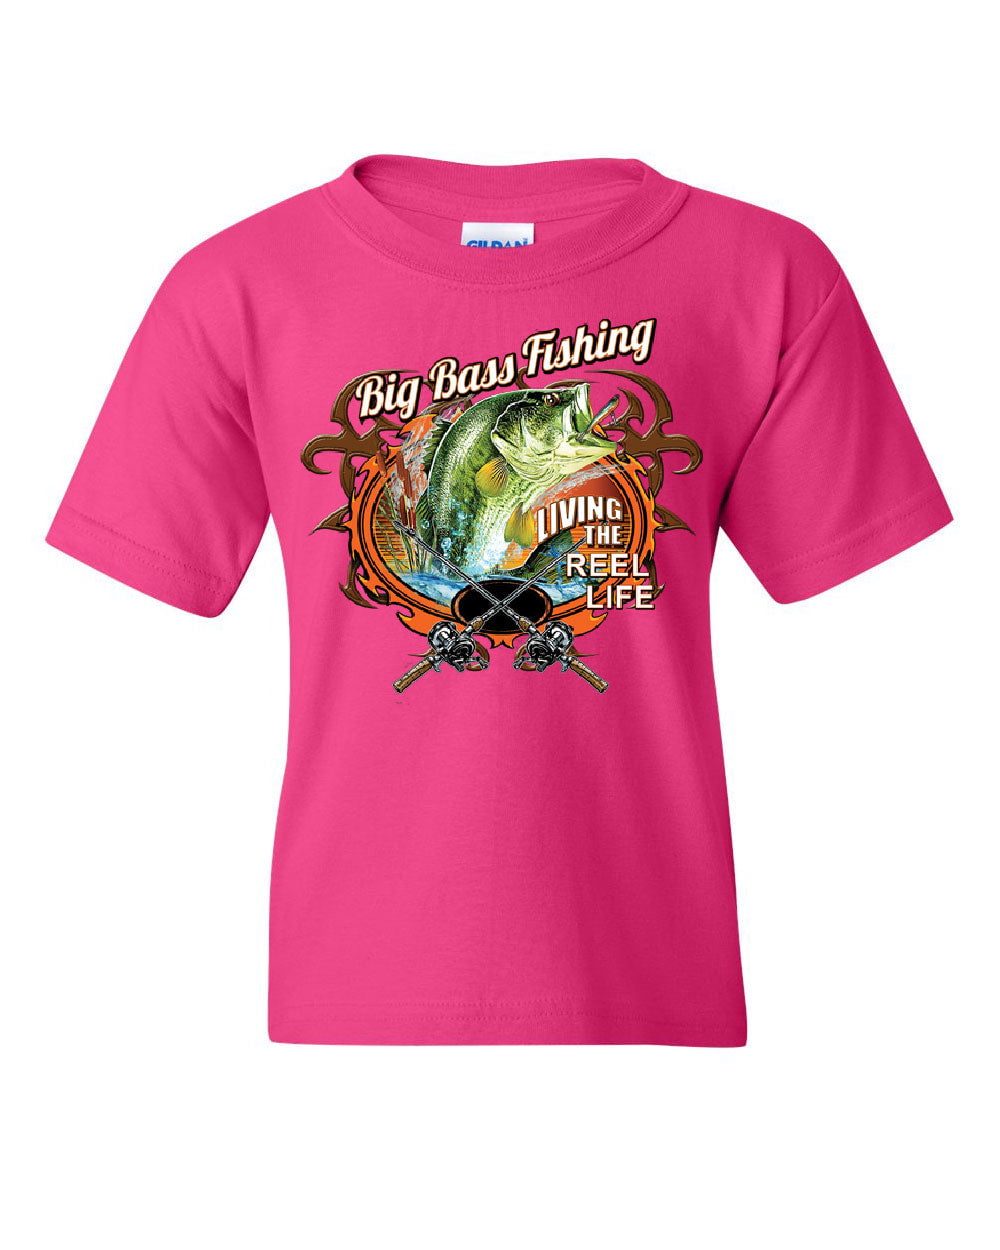 Tee Hunt Big Bass Fishing Youth T-Shirt Living The Reel Life